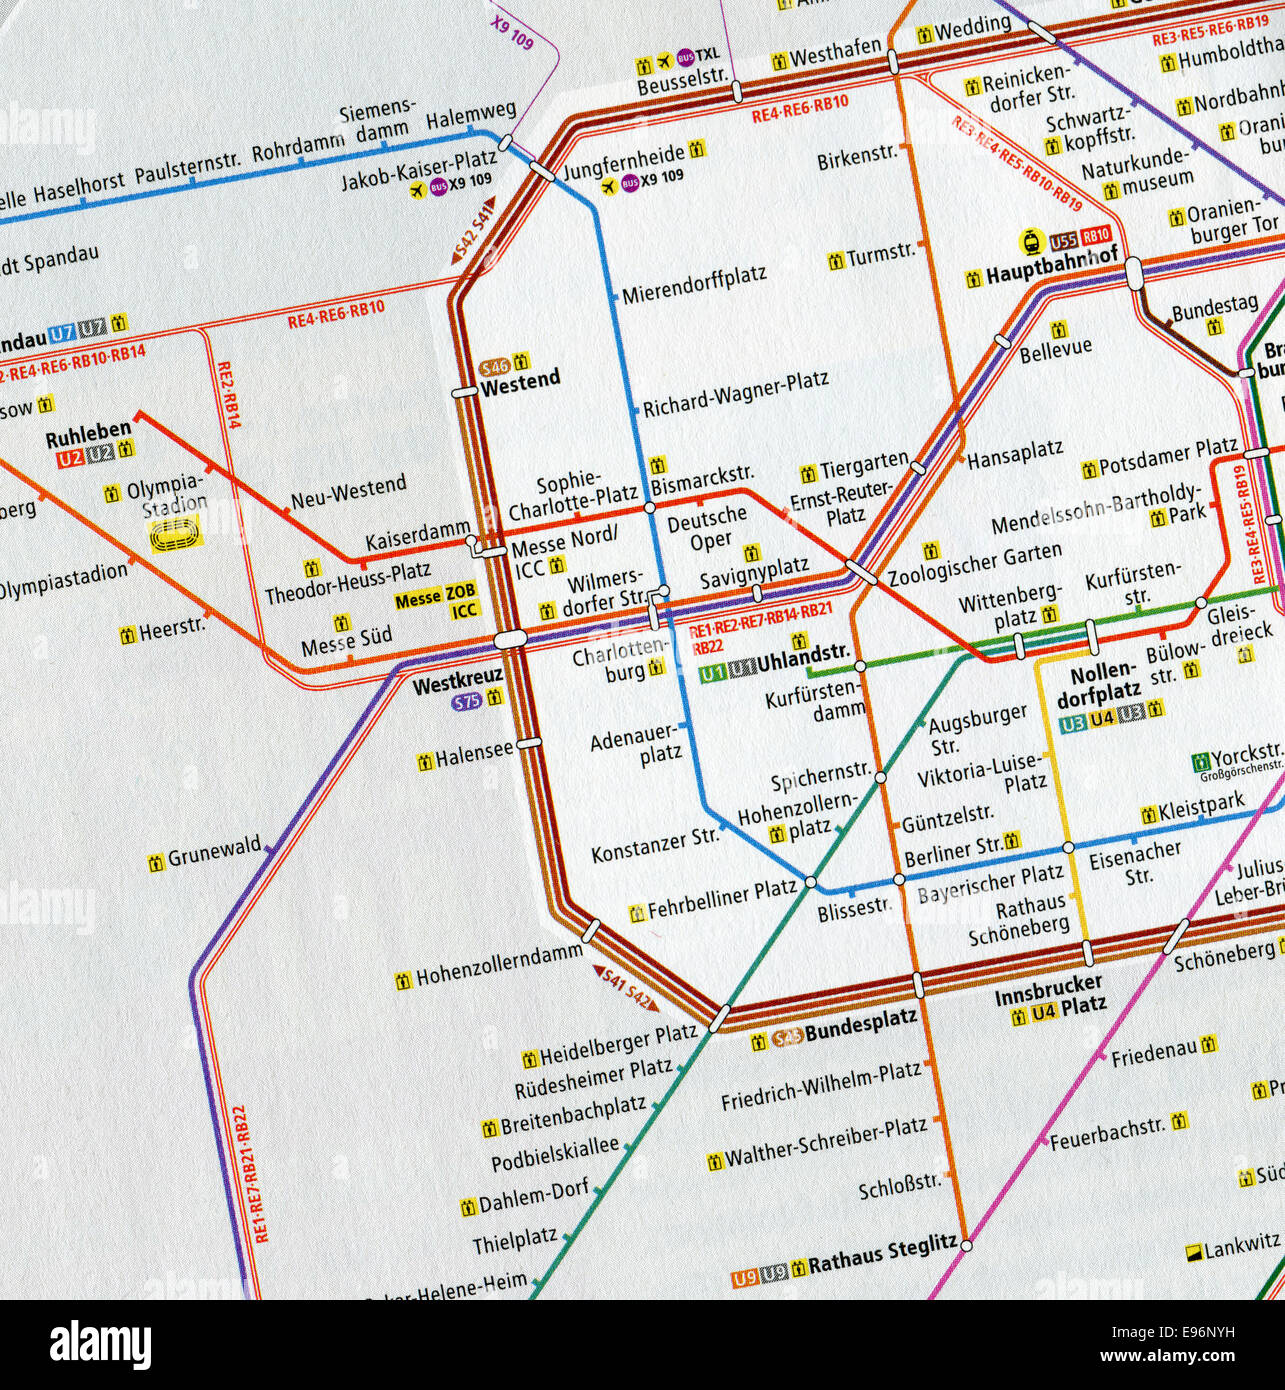 BERLIN, GERMANY - MAY 11, 2014: Close-up map of central Berlin subway stations. Stock Photo